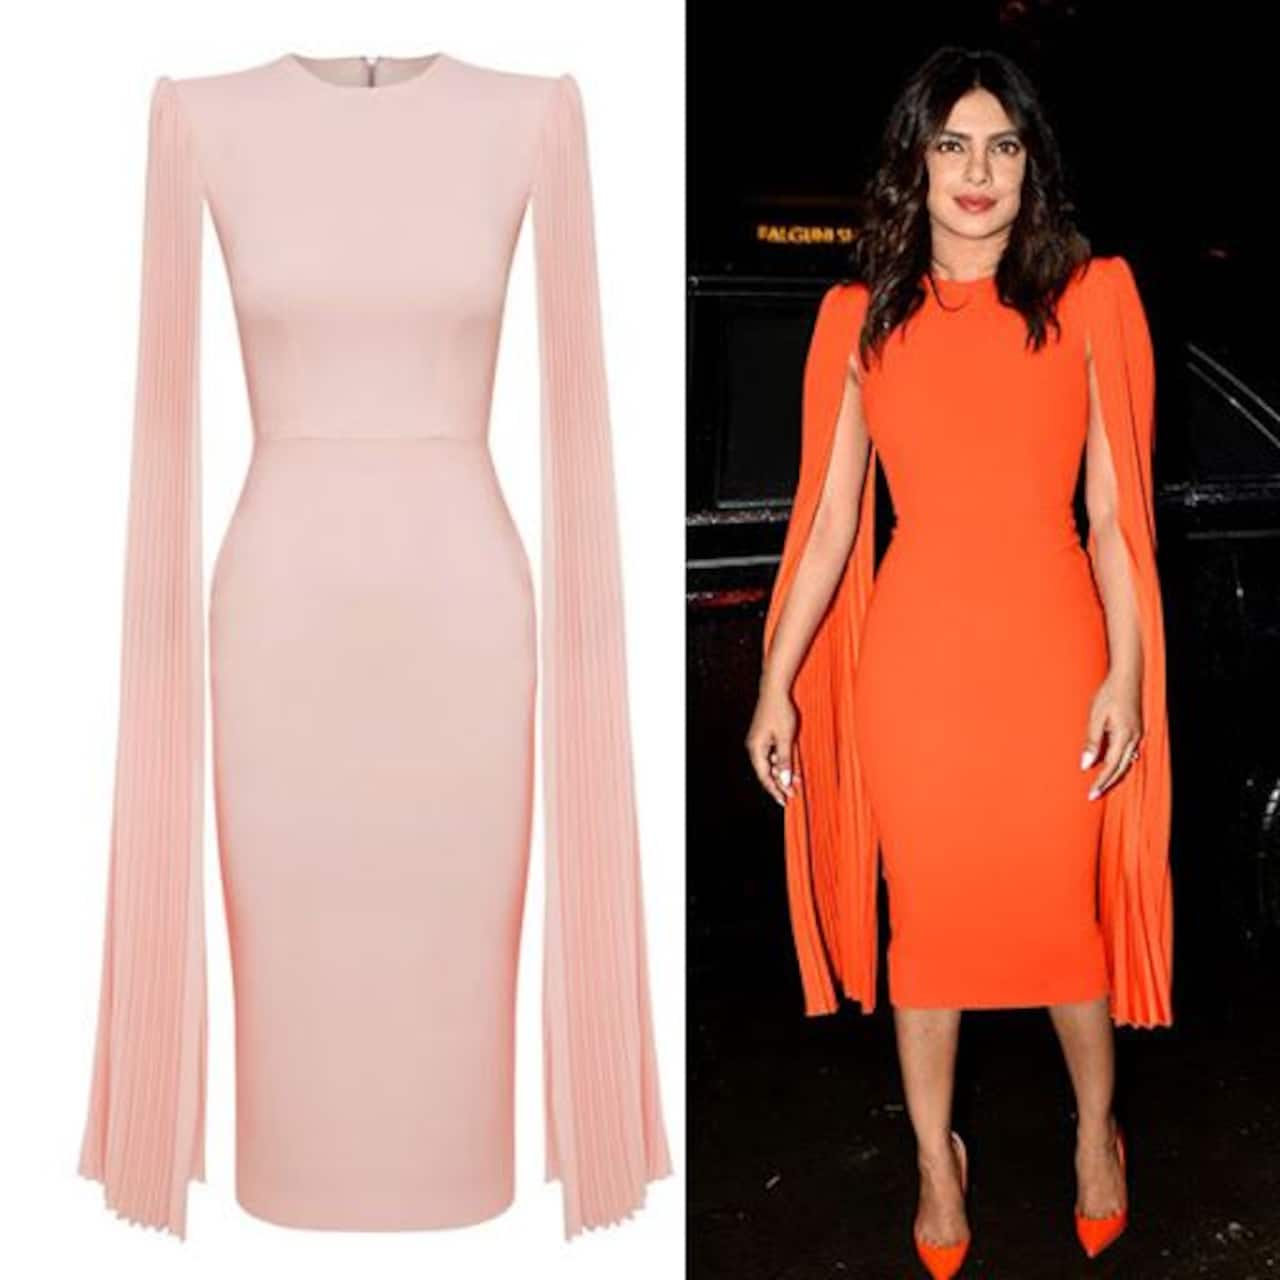 Guess the price! Priyanka Chopra’s fiery orange dress comes with a steep price tag!